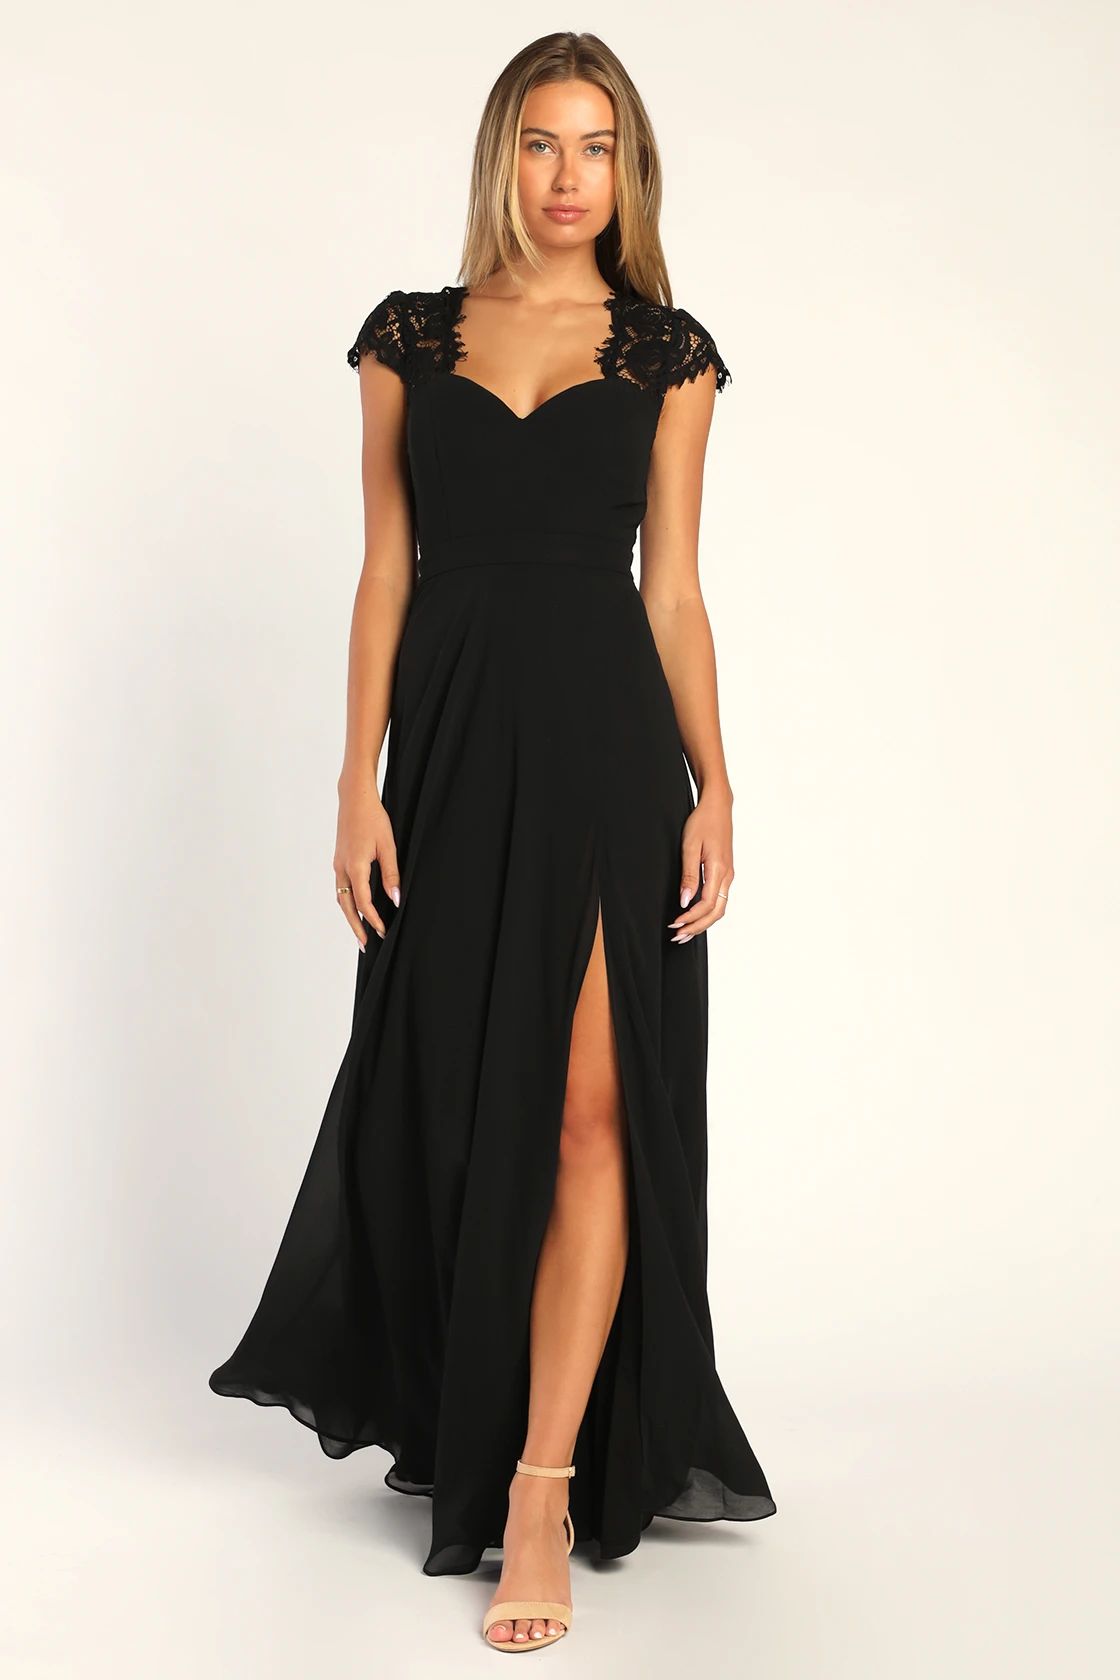 Momentous Moments Black Lace Backless Maxi Dress | Lulus (US)